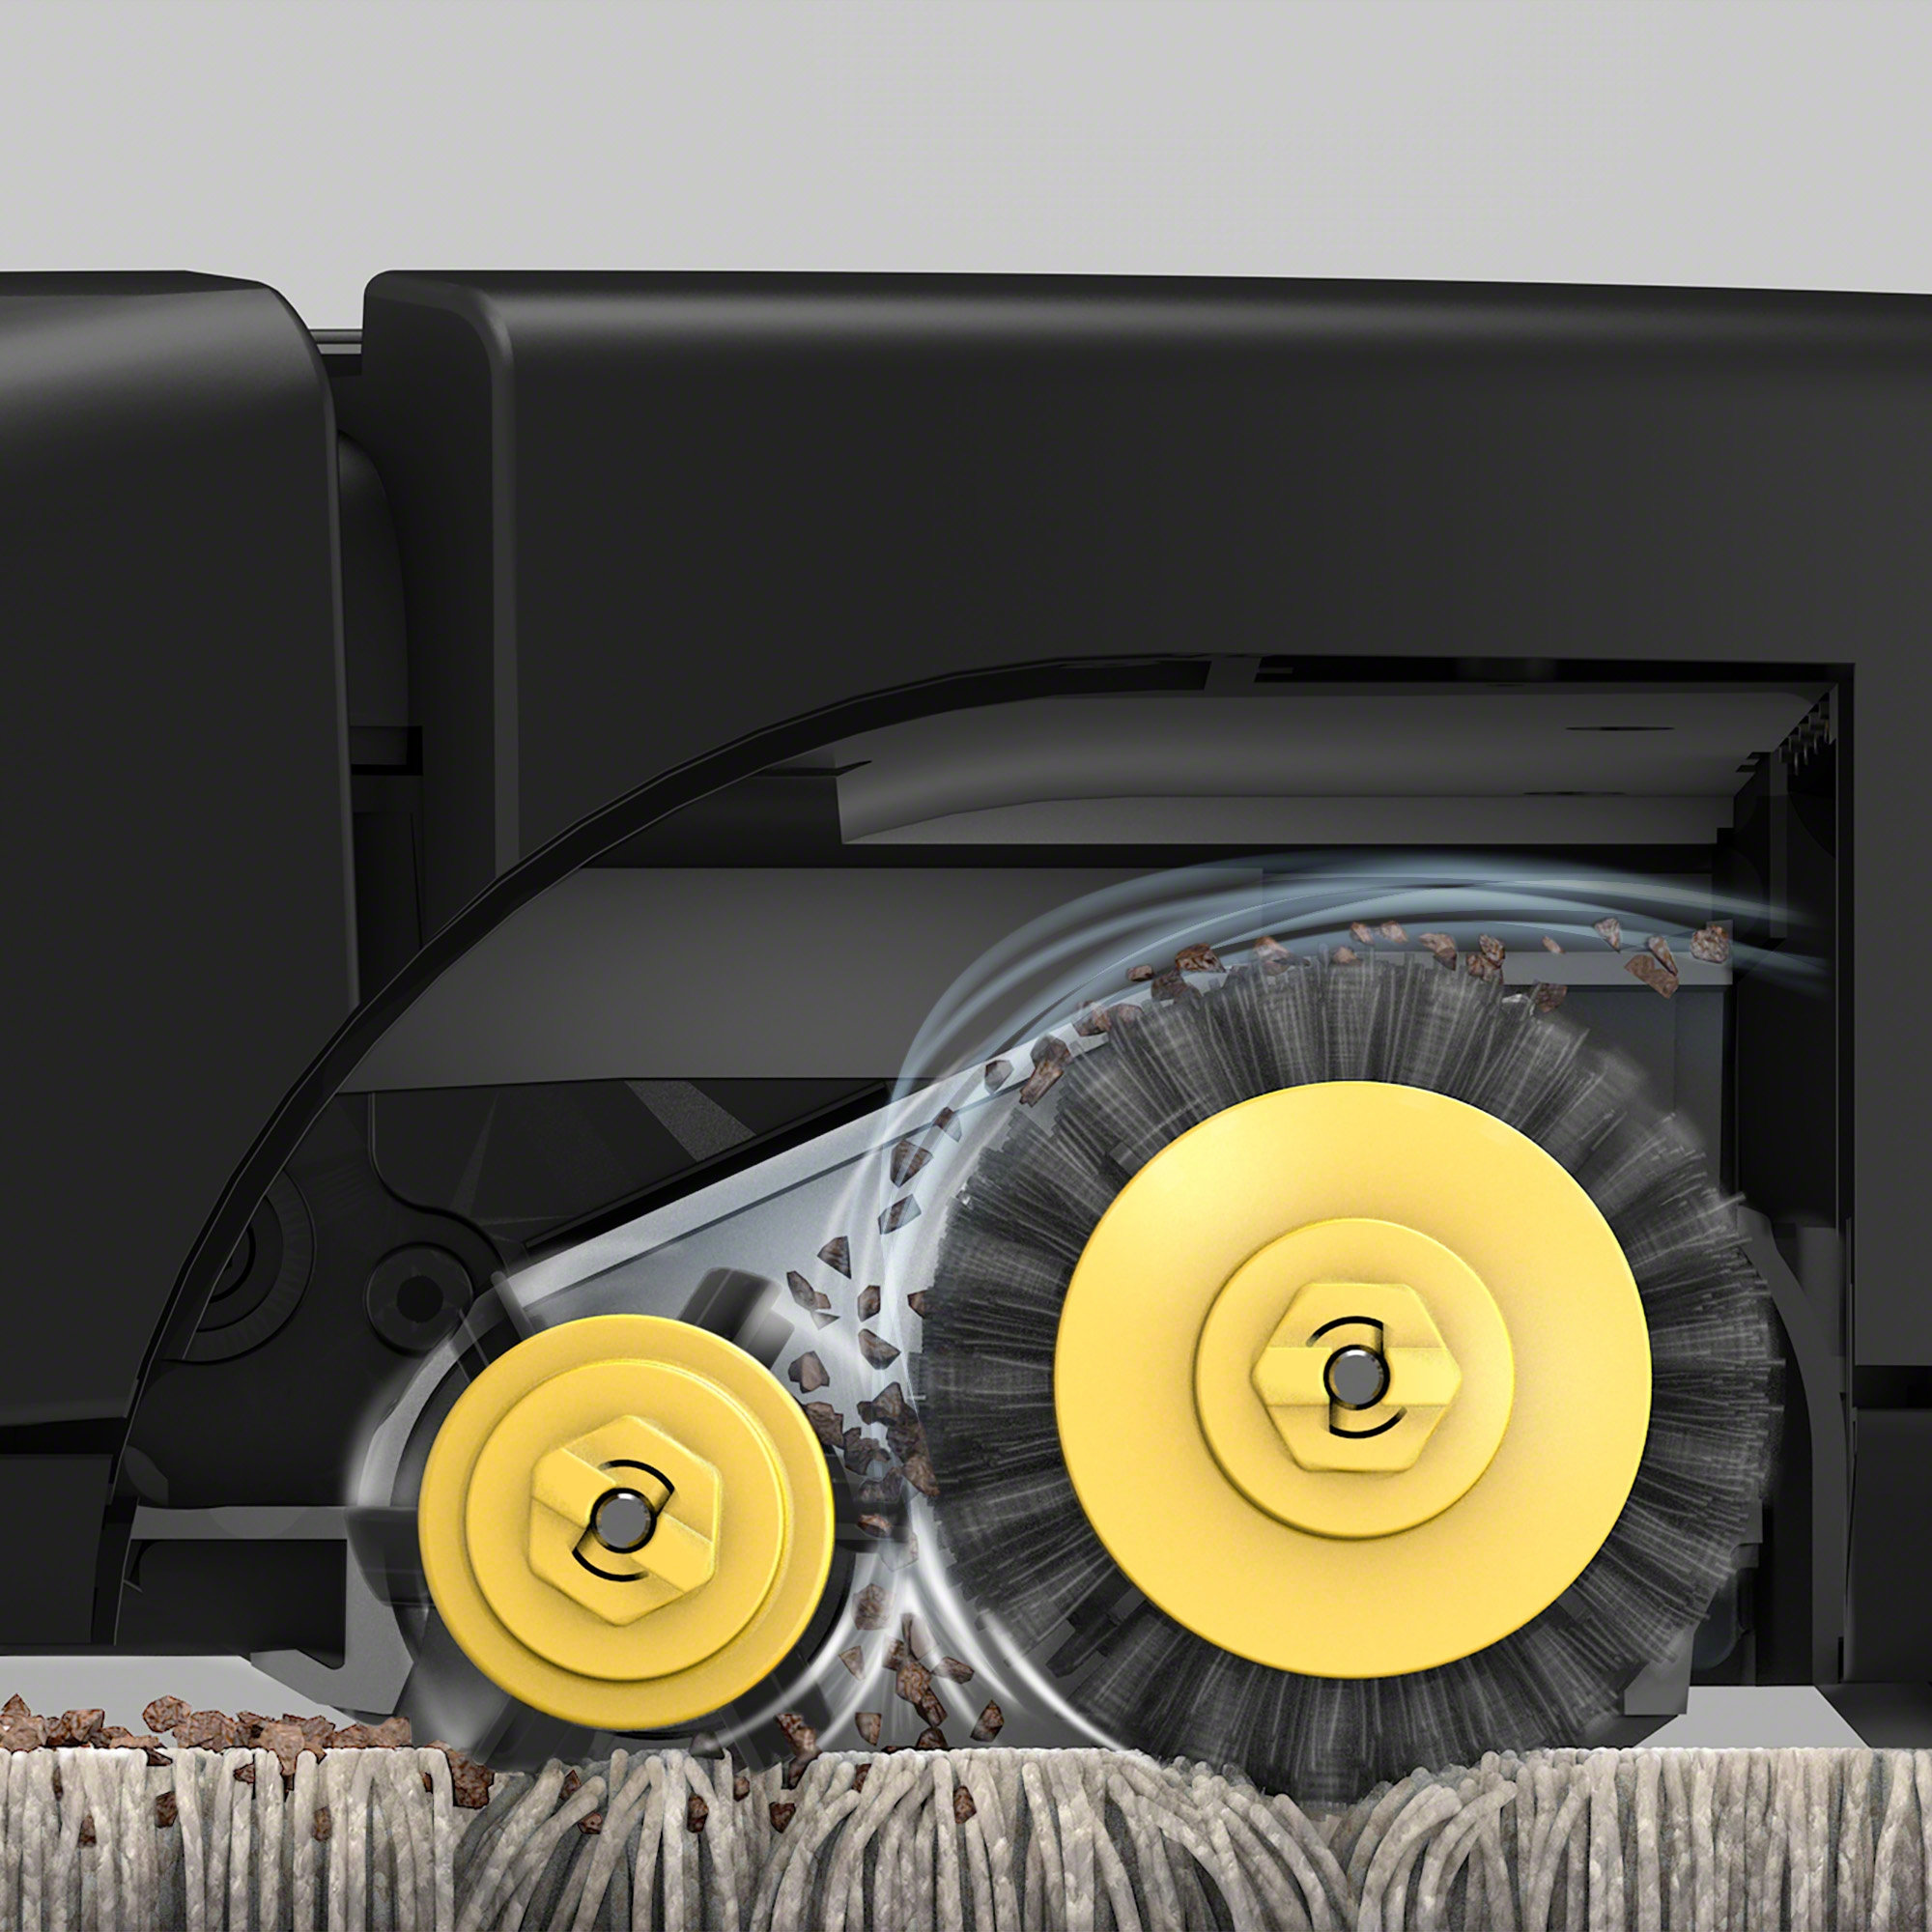 iRobot® Roomba® 614 Robot Vacuum- Good for Pet Hair, Carpets, Hard Floors, Self-Charging - image 5 of 9